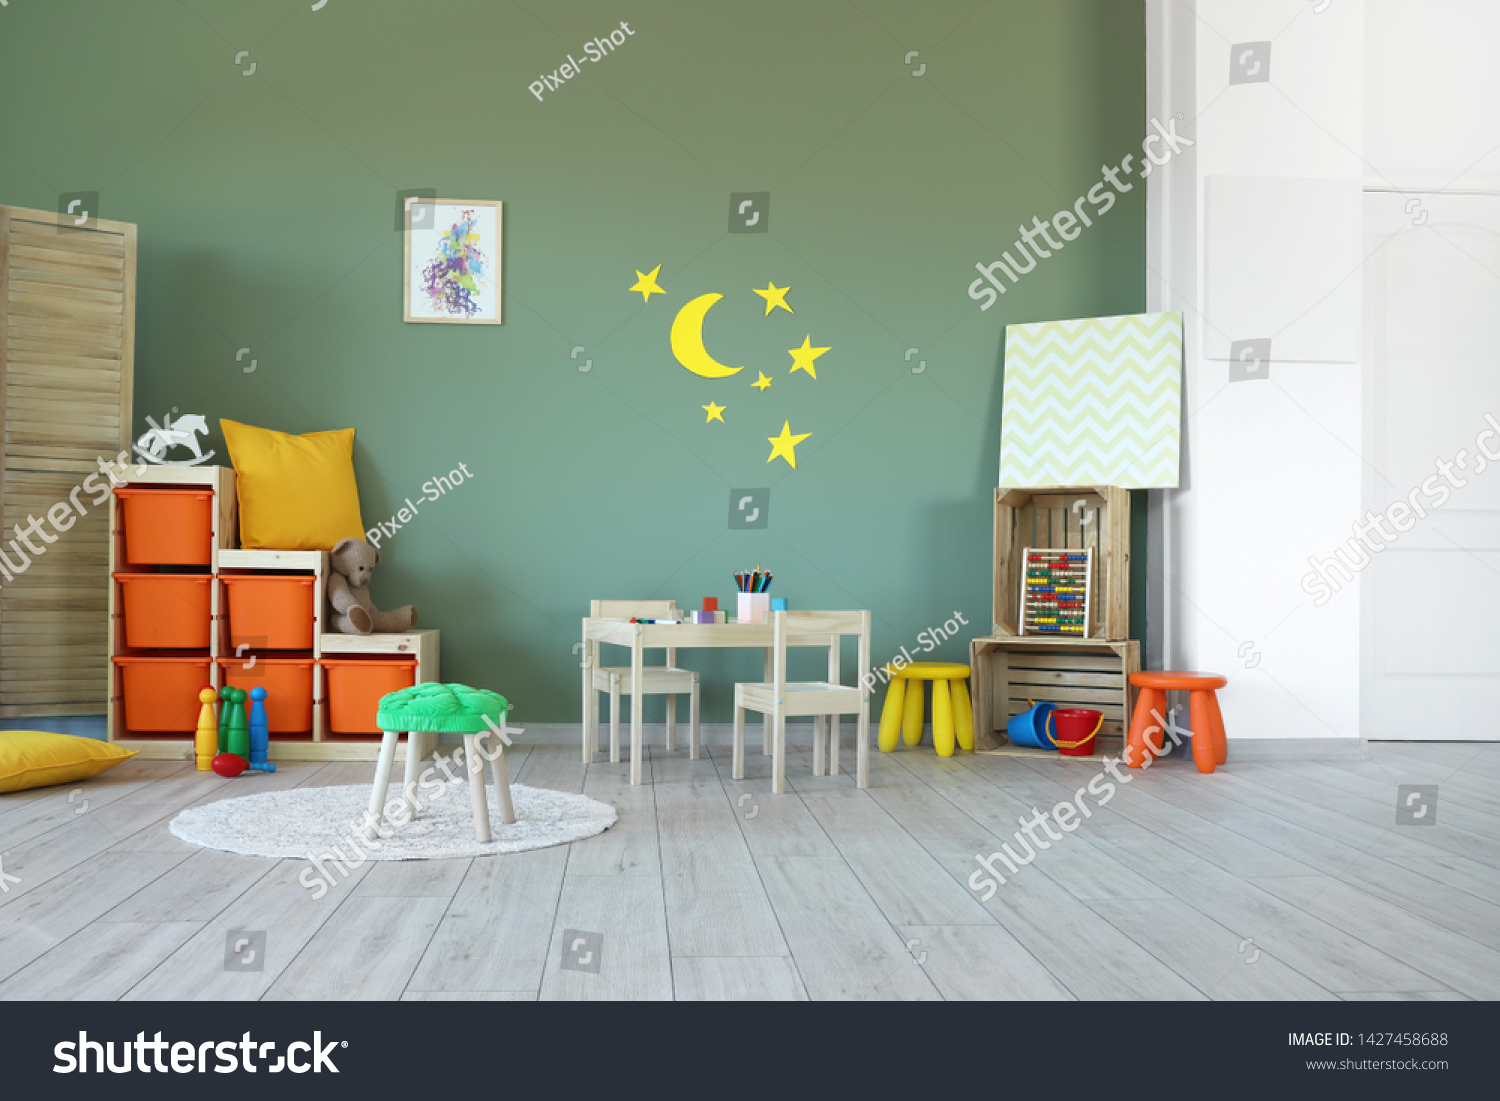 Stylish interior of modern playroom in kindergarten #1427458688